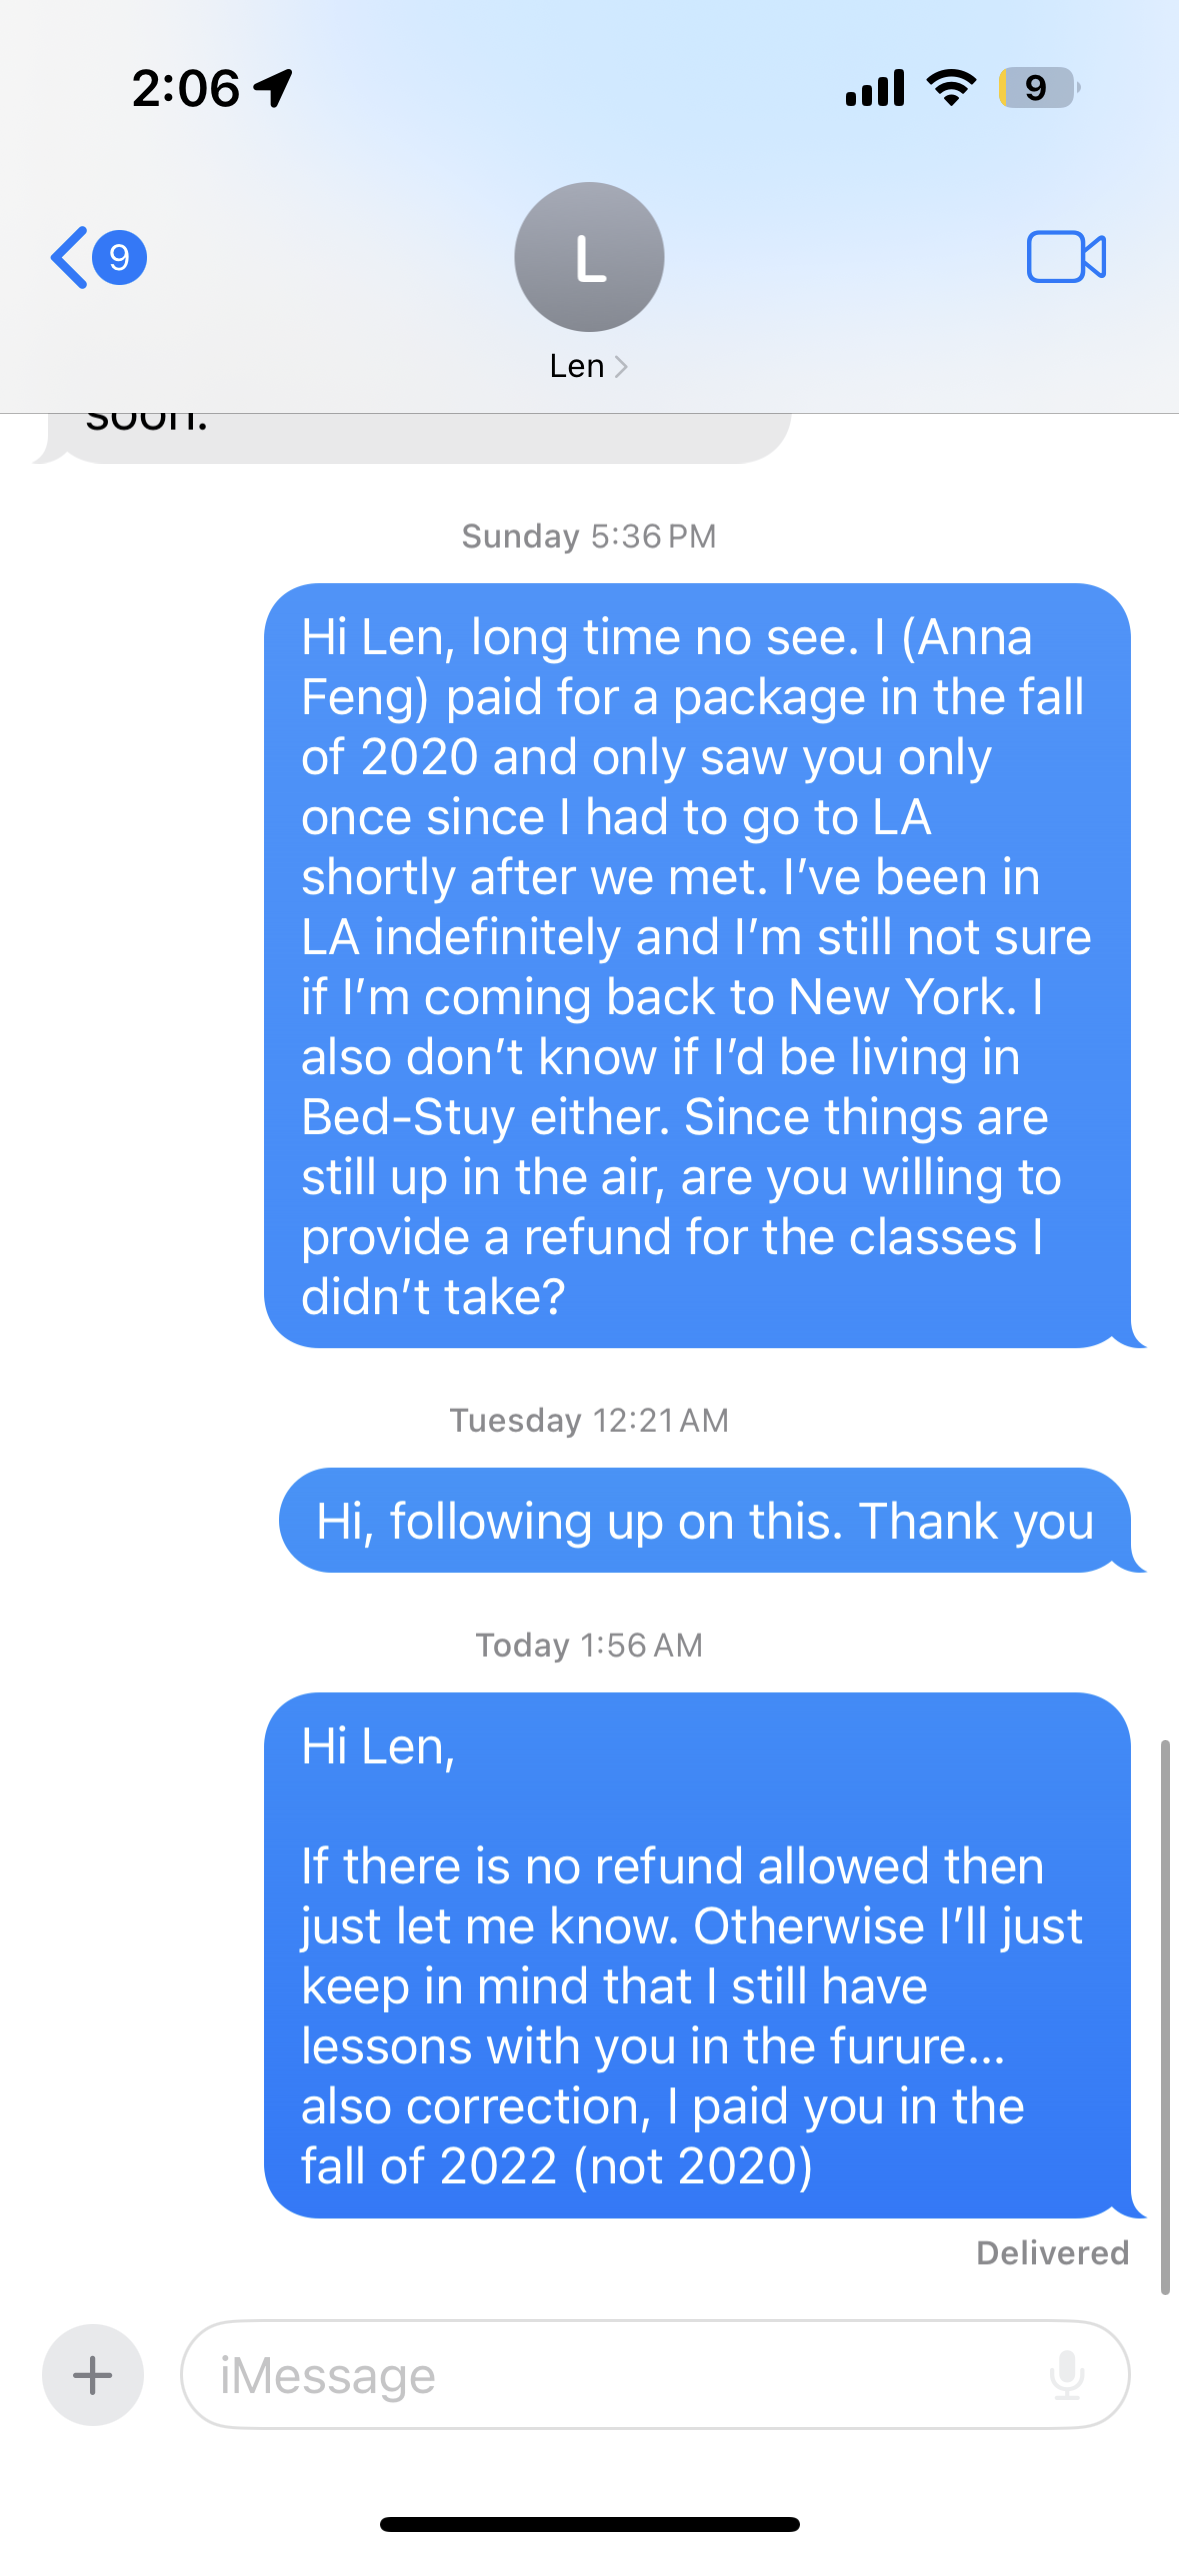 Contacting him after my hiatus